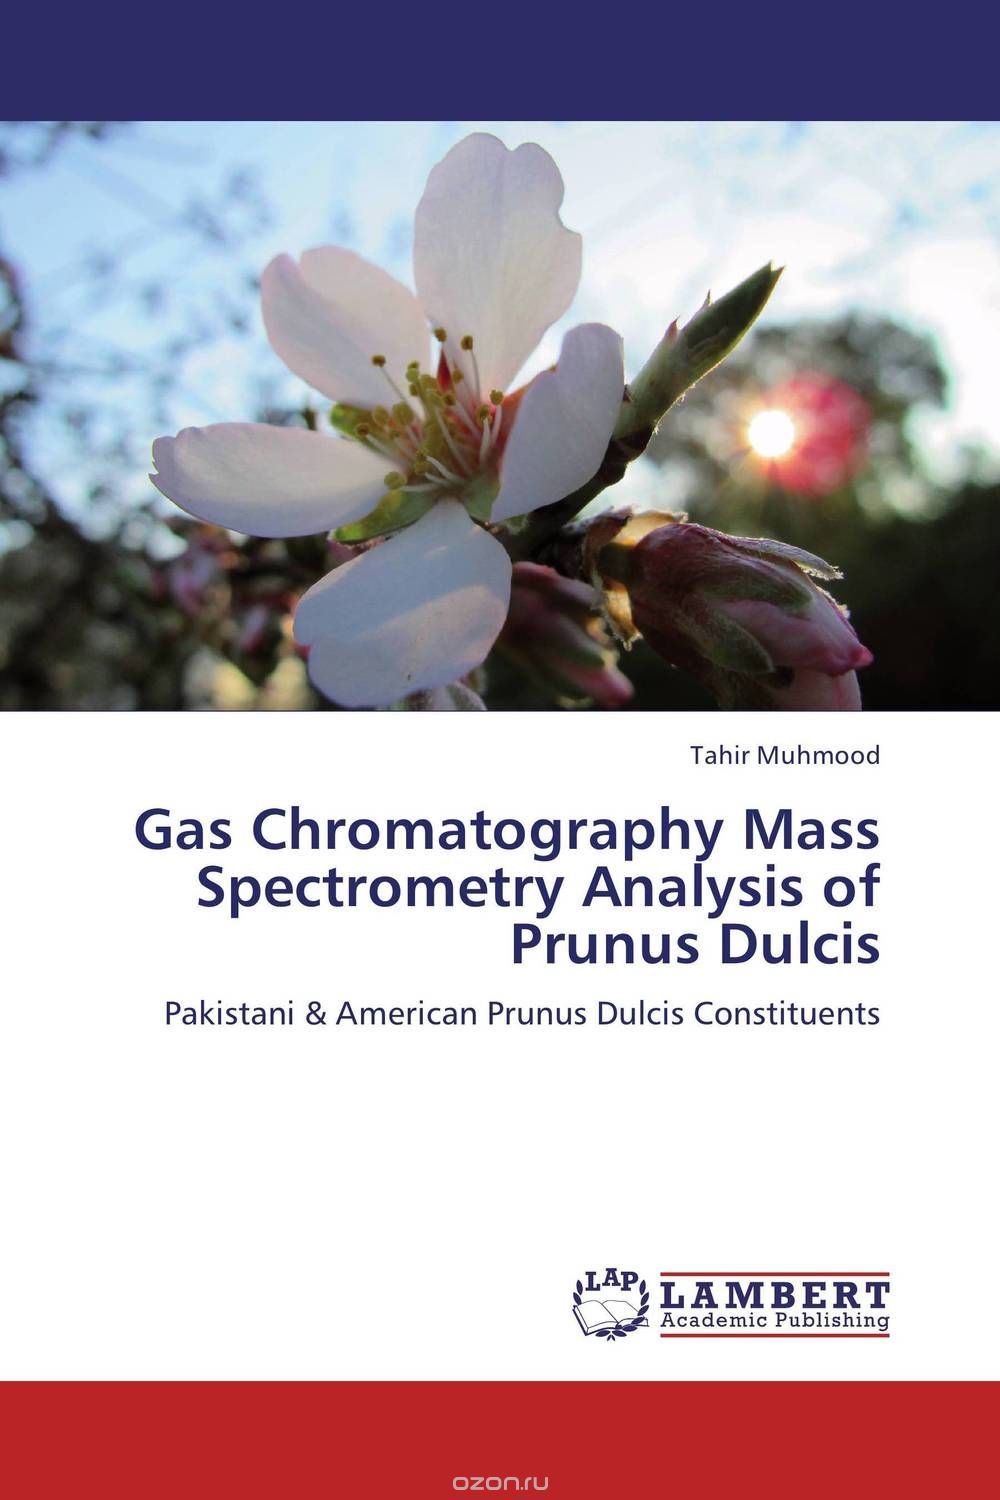 Скачать книгу "Gas Chromatography Mass Spectrometry Analysis of Prunus Dulcis"